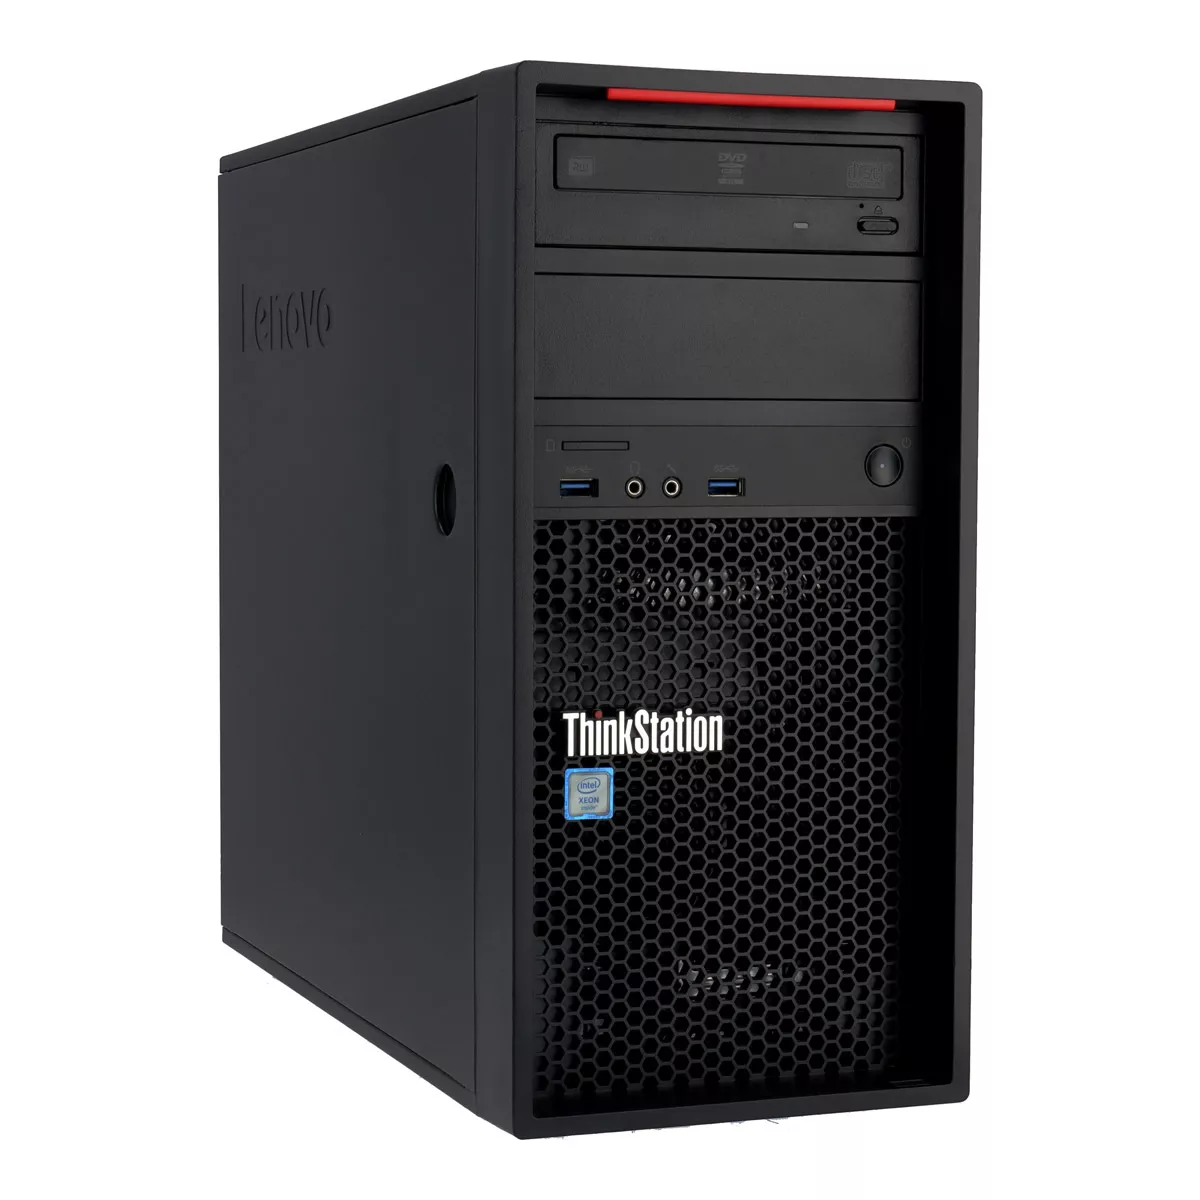 Lenovo Thinkstation P310 Tower QuadCore Xeon E3 1245 v5 16GB 500GB SSD M4000 A+